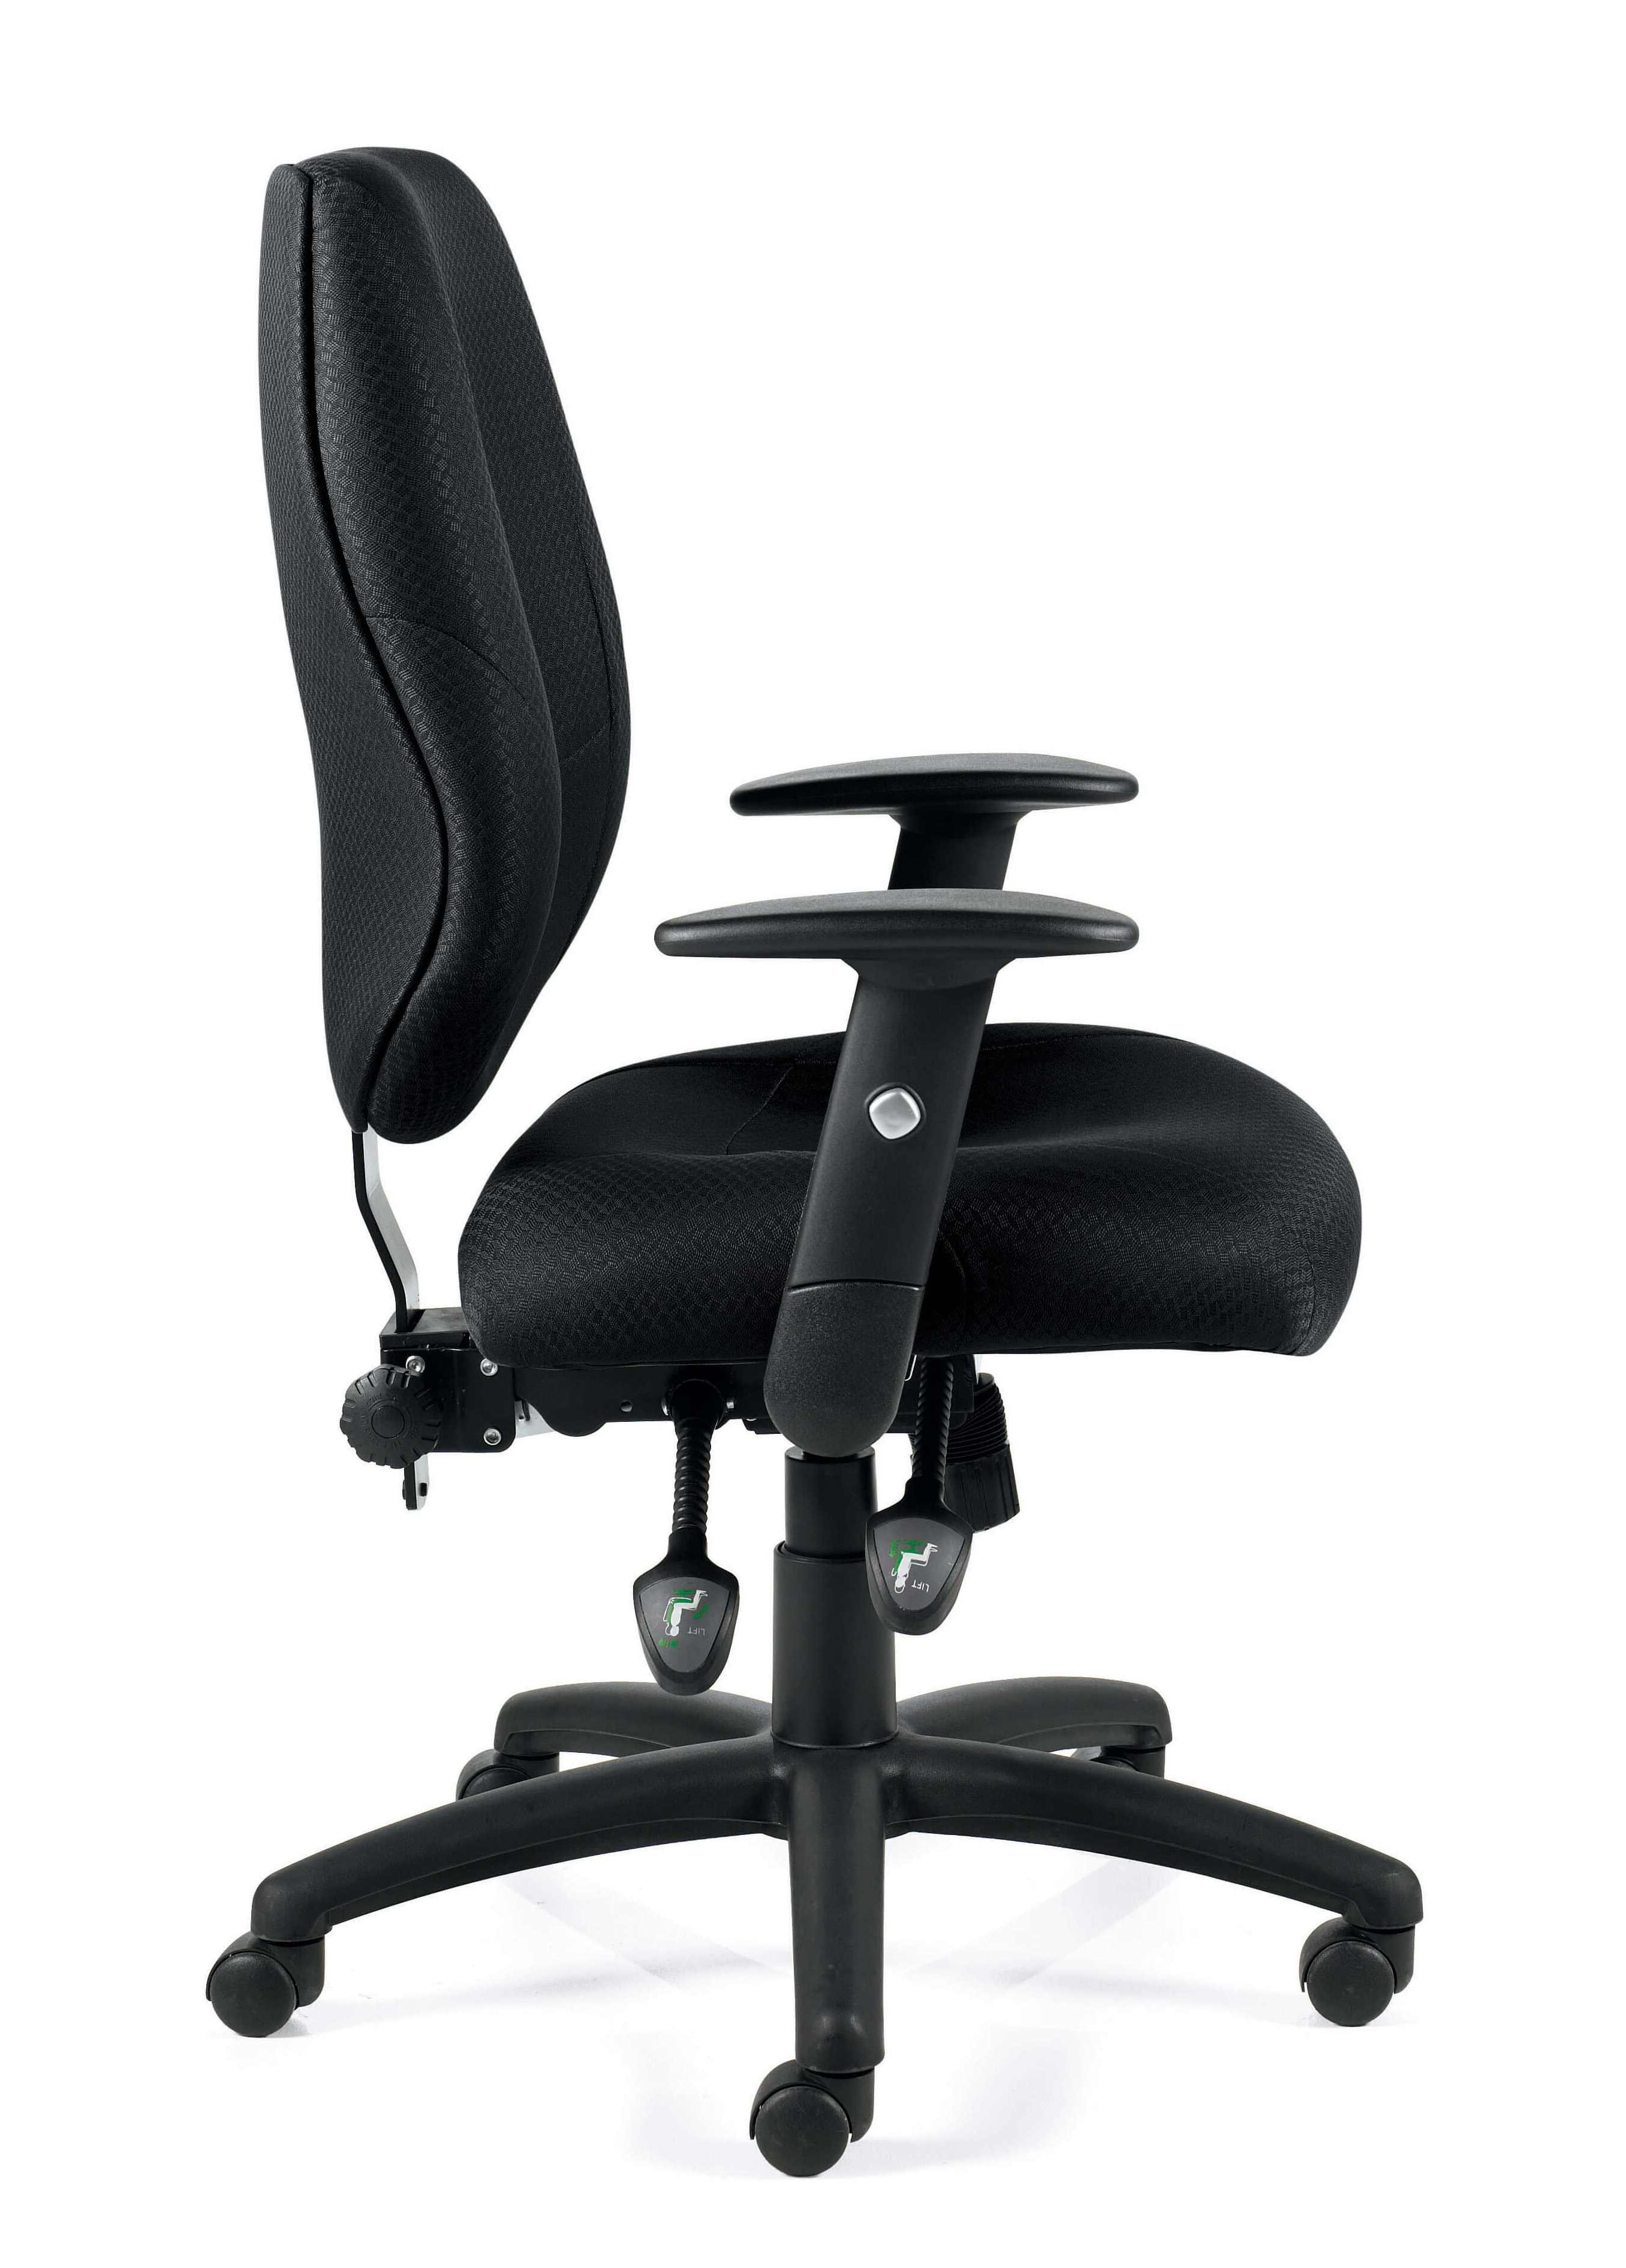 Ergonomic task chair side view